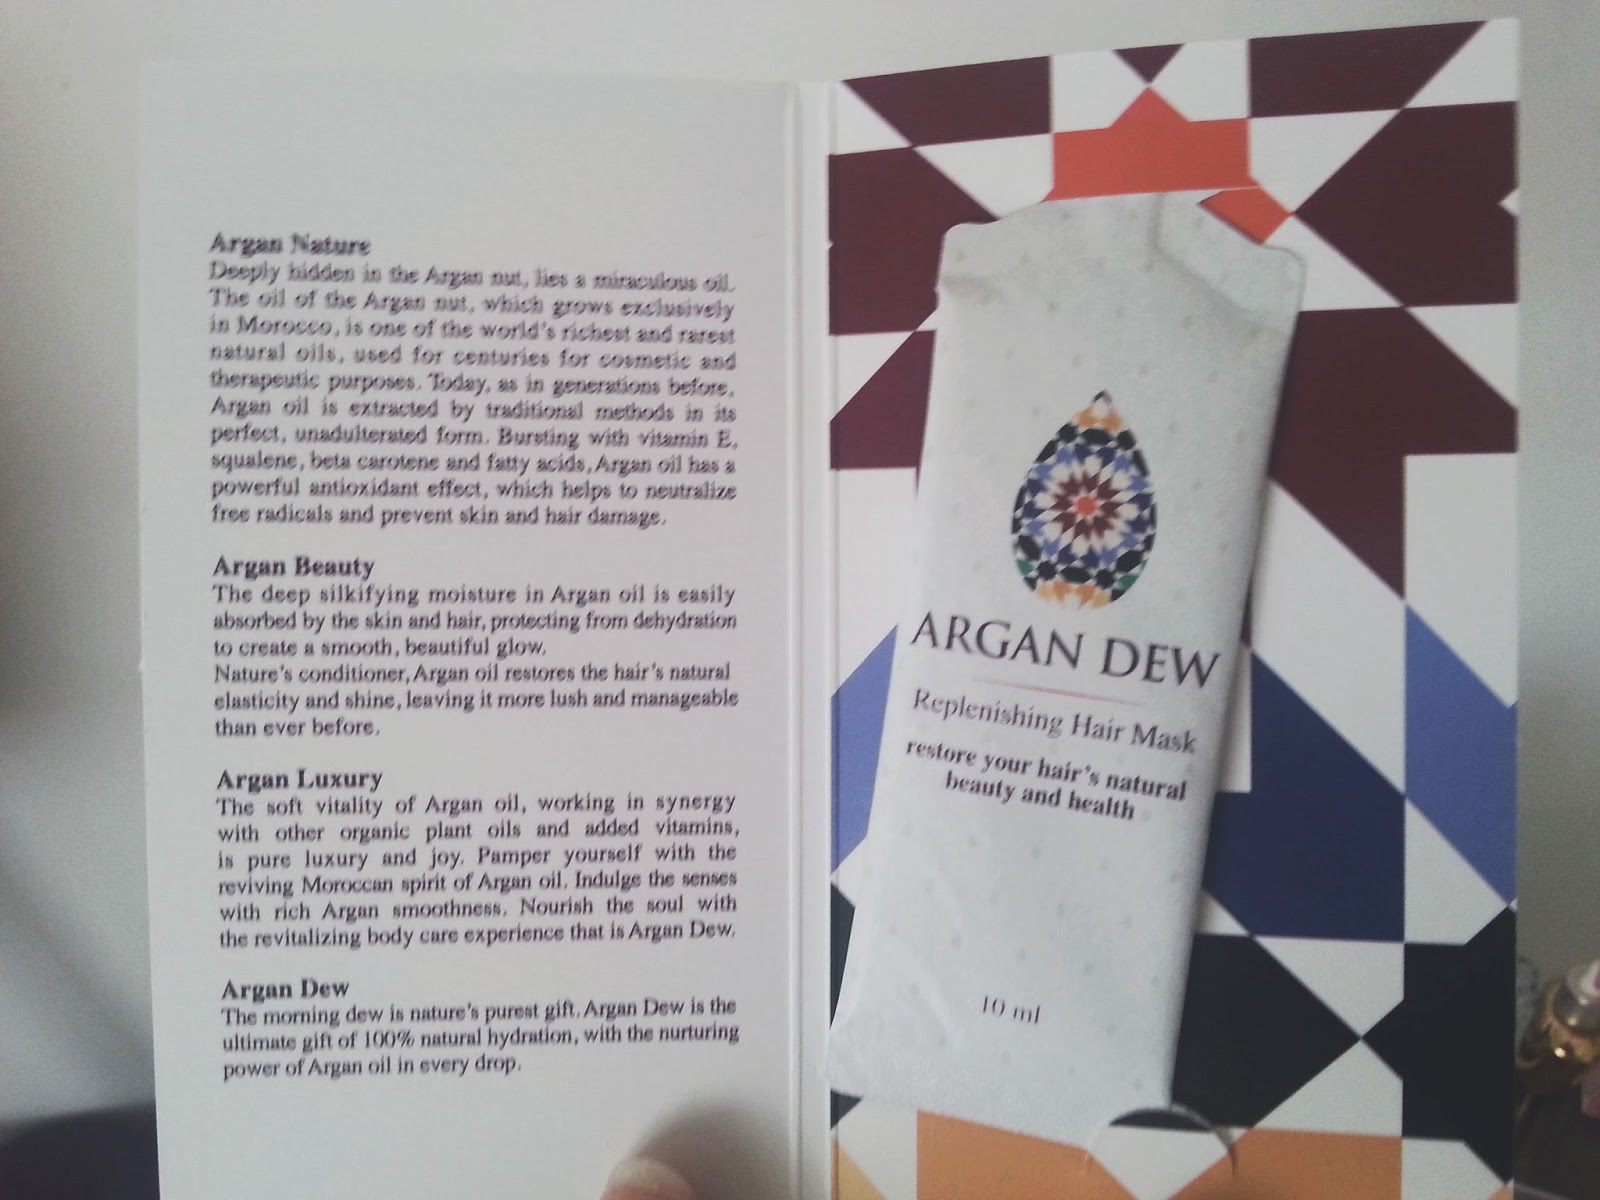 Argan Dew Miraculous Argan Oil & Replenishing Hair Mask